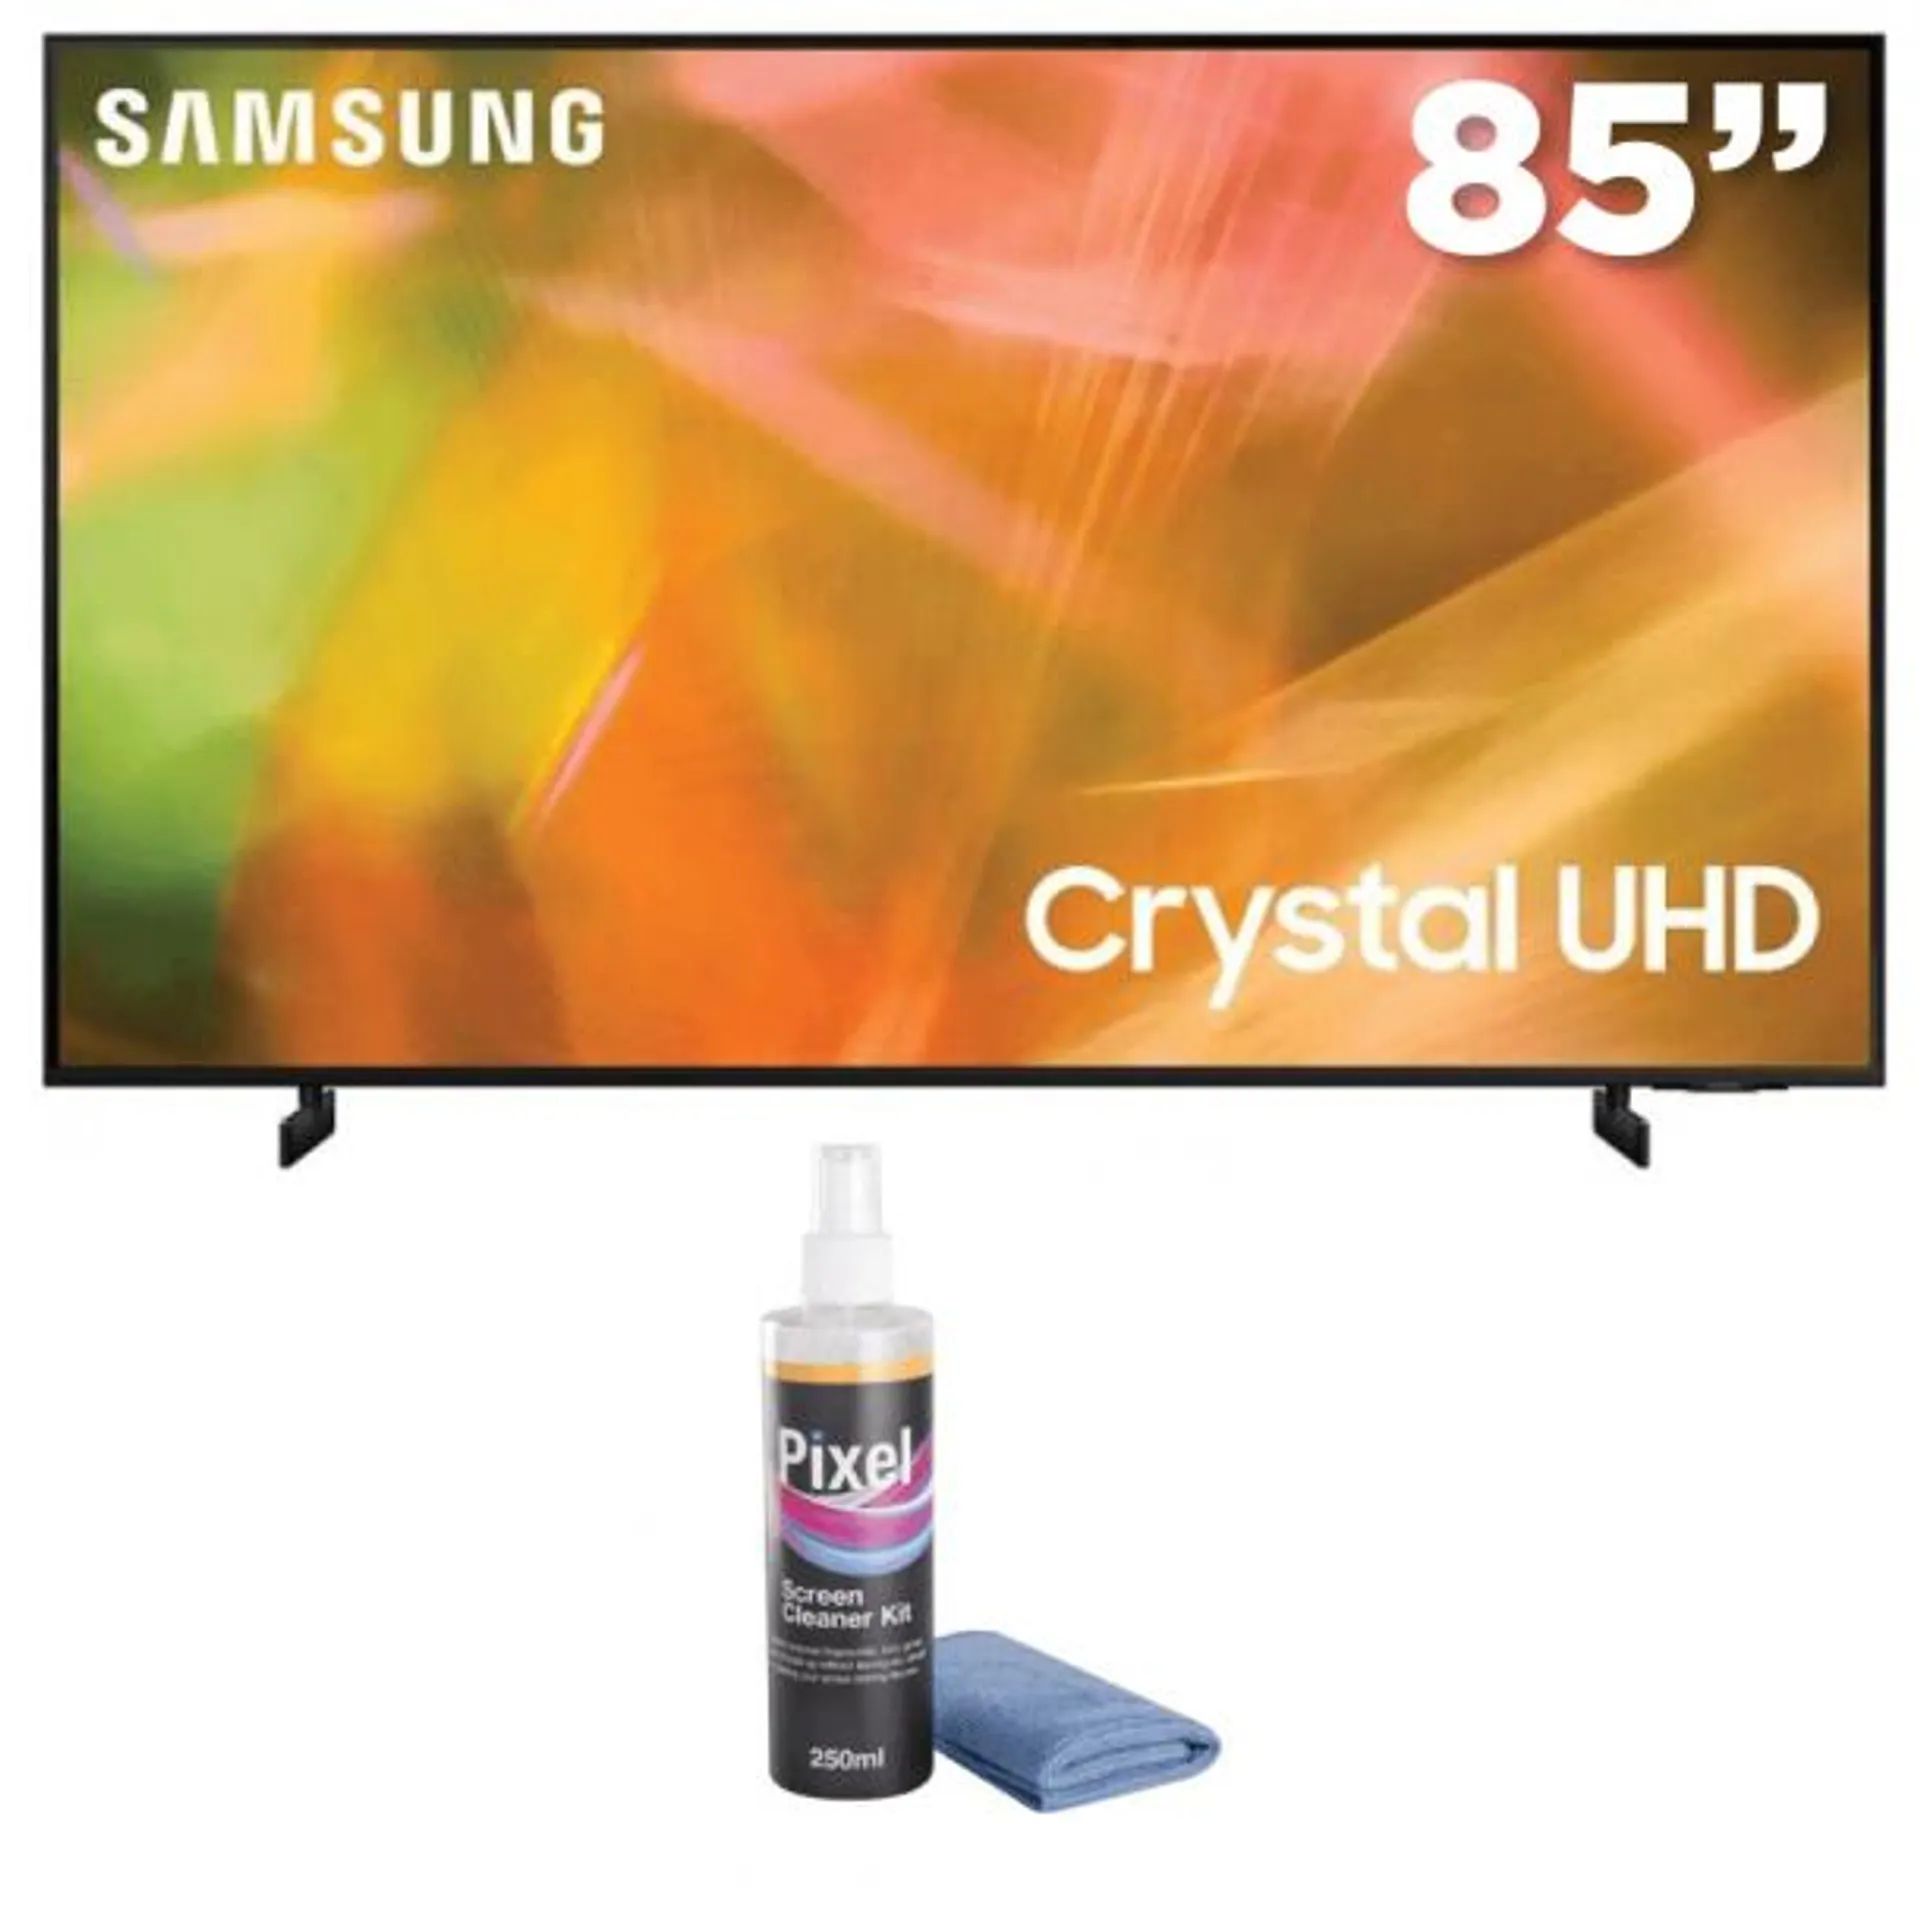 Samsung 85" Crystal UHD 4K Smart TV + Pixel Screen Cleaner